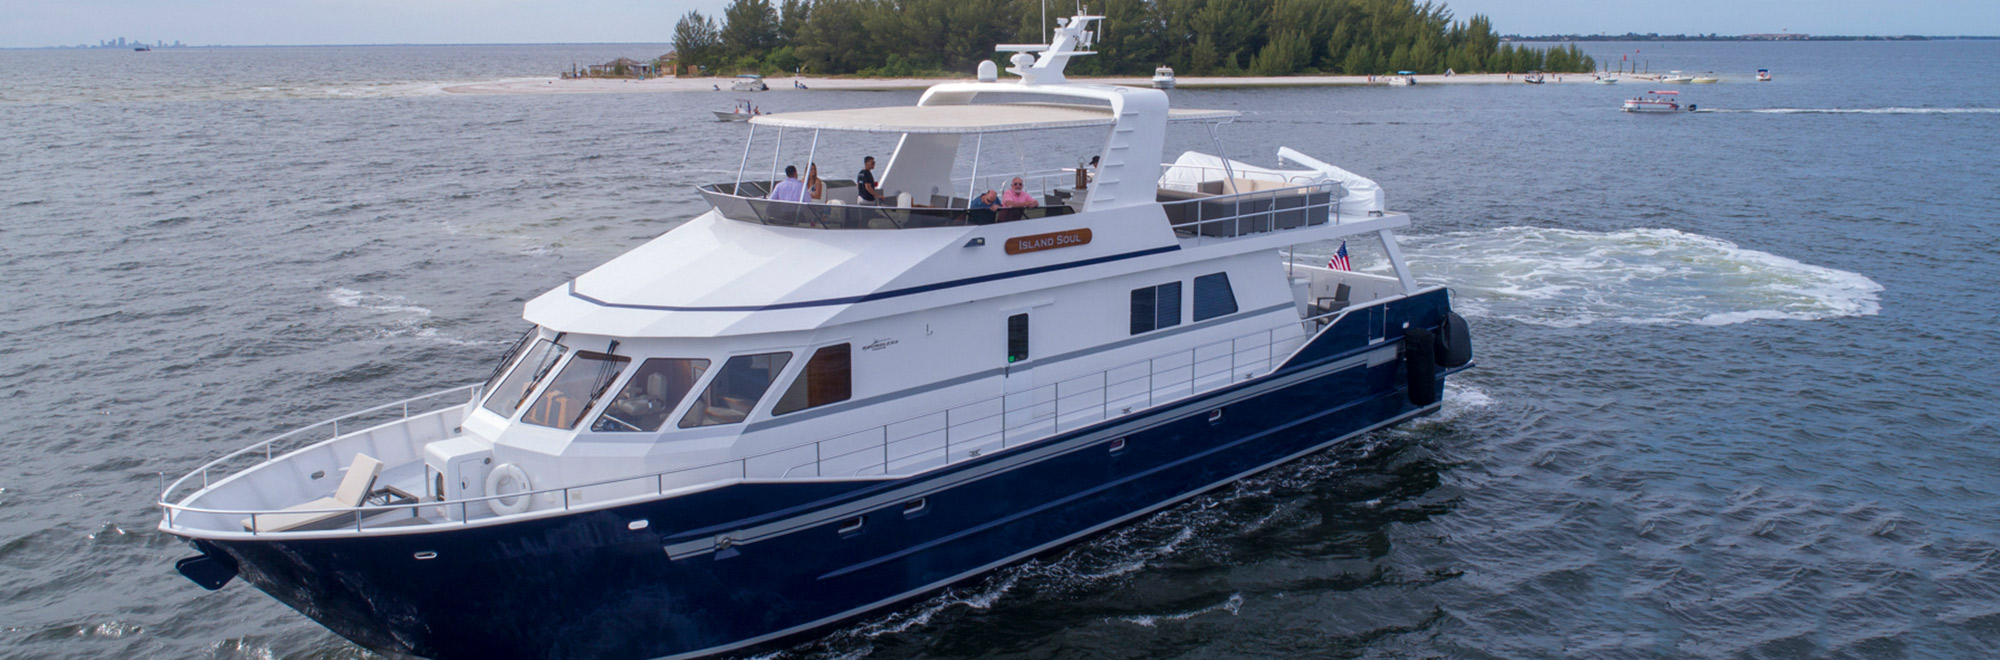 yacht charter tampa bay